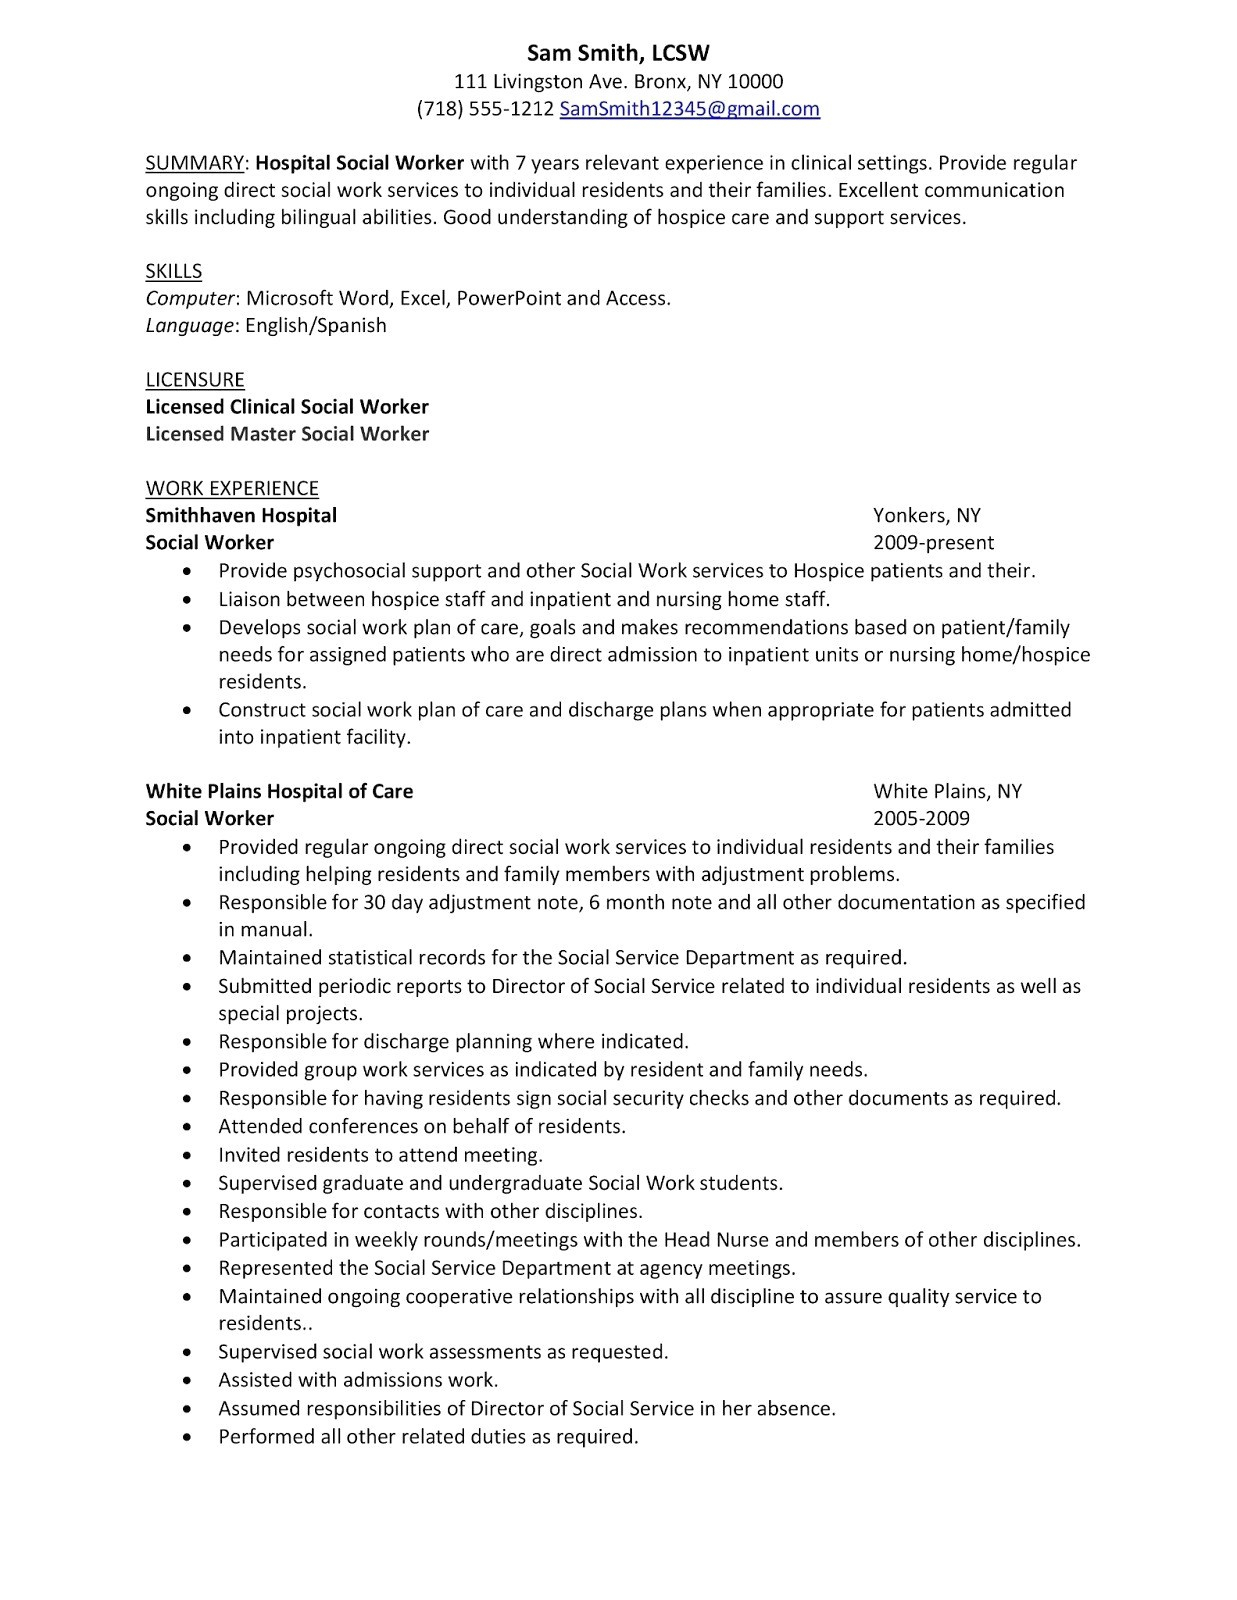 Resume Summary Examples Resume Sample Bilingual Skills New 46 Awesome Resume Summary